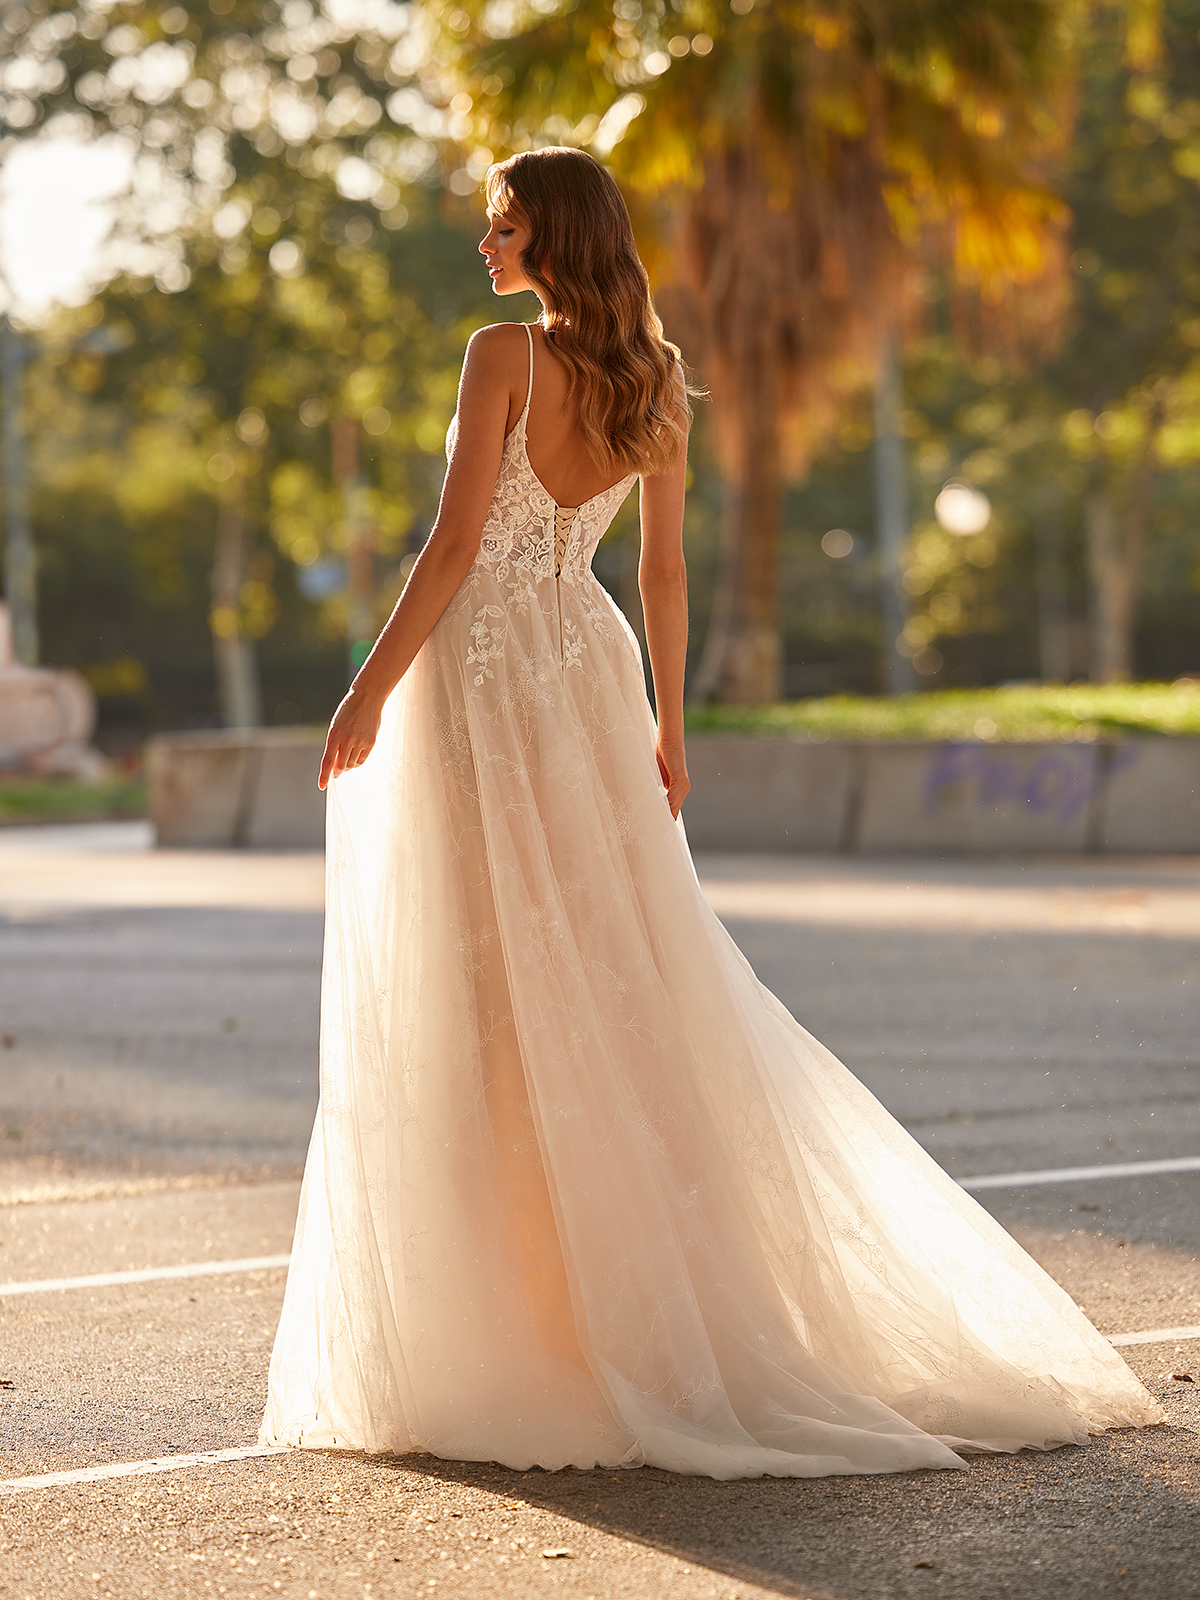 5 Low Back Wedding Dress Ideas